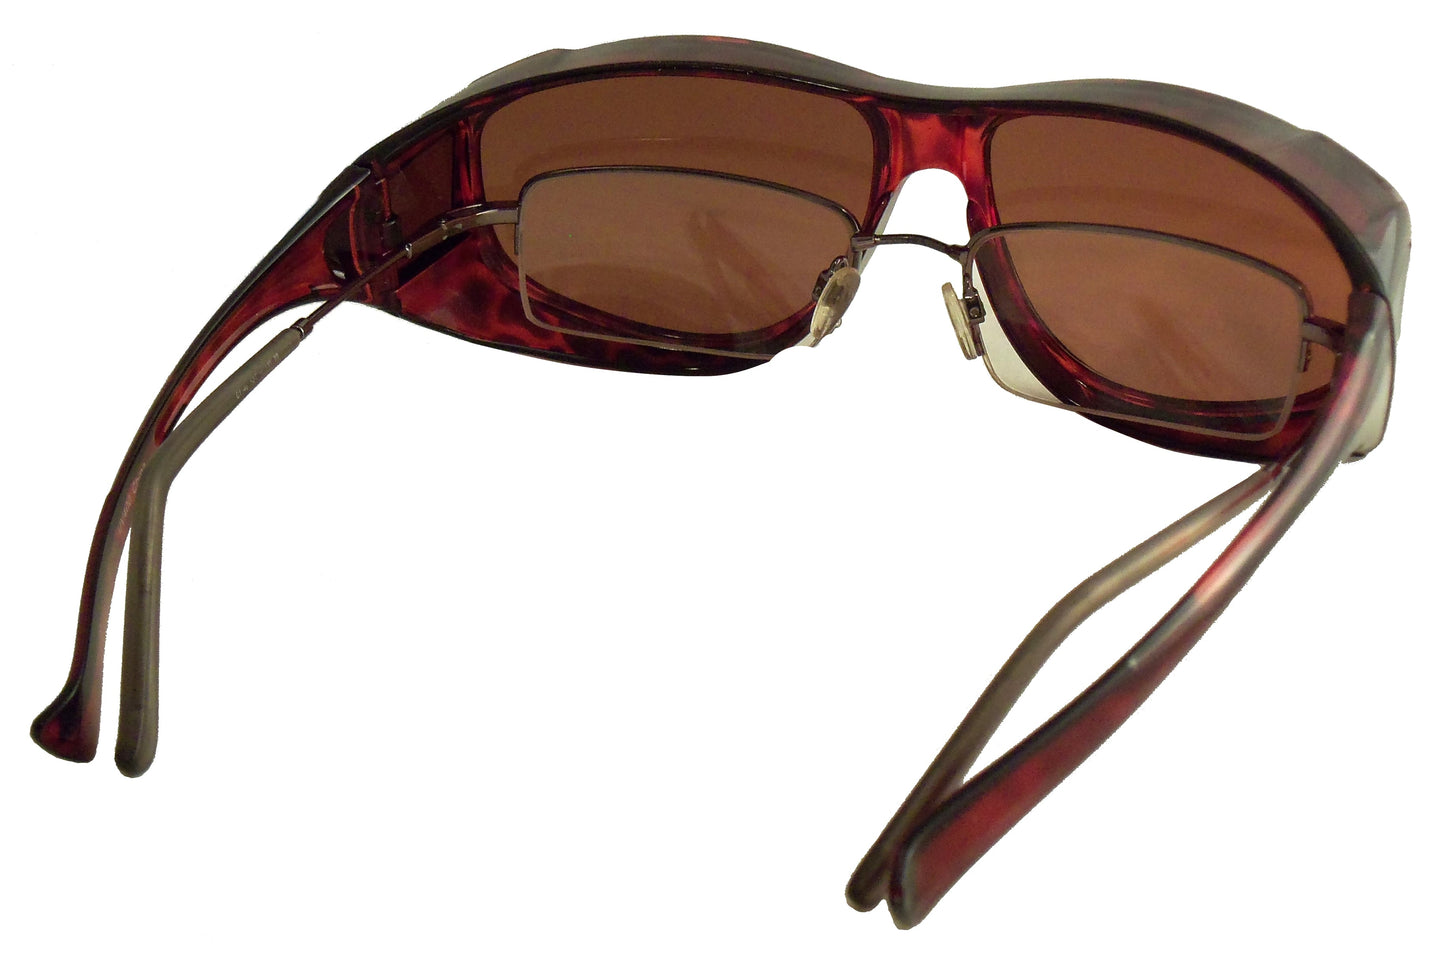 Fit Over Sunglasses with Blue Blocker HD Driving Lens - Wear Over Prescription Glasses for Men or Women - Ideal Eyewear